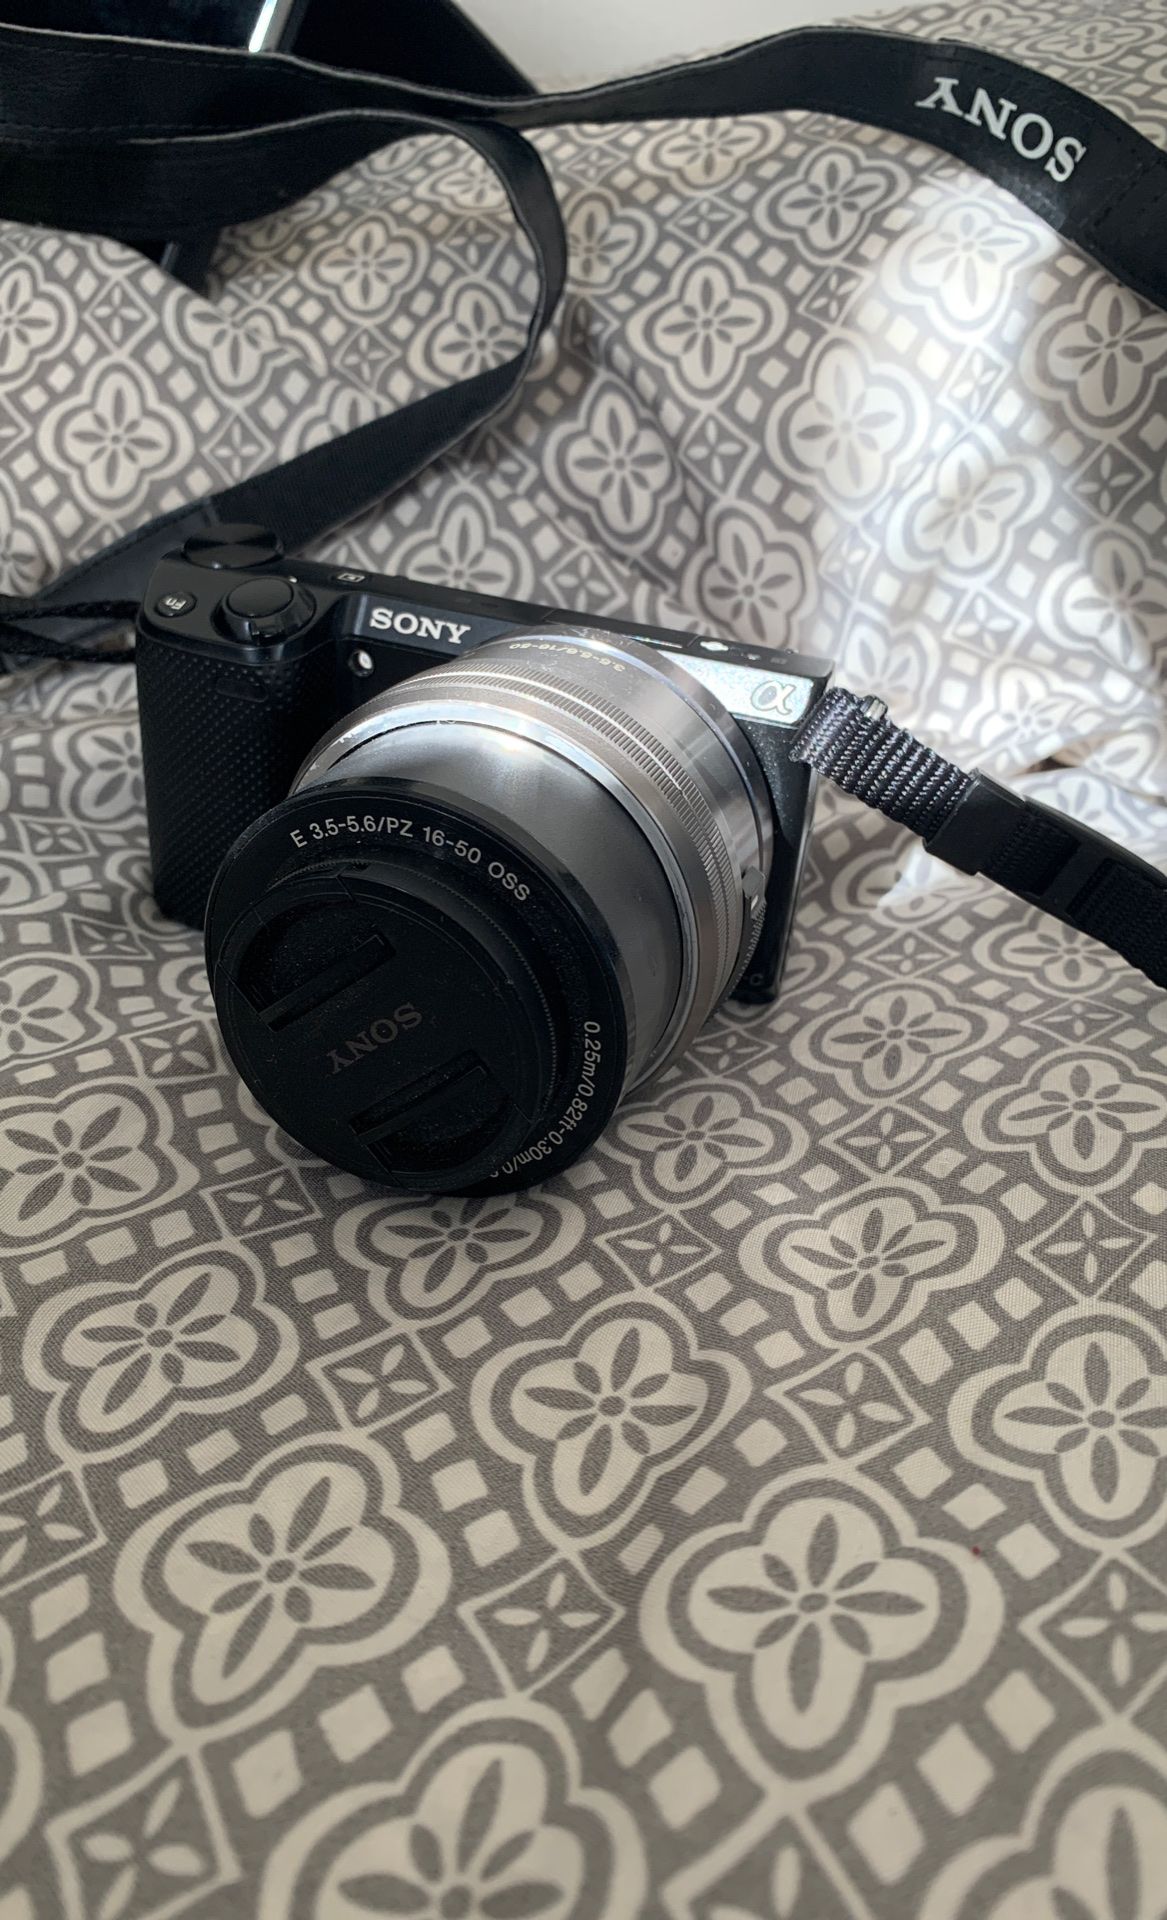 Sony Alpha NEX-5T Mirrorless Digital Camera